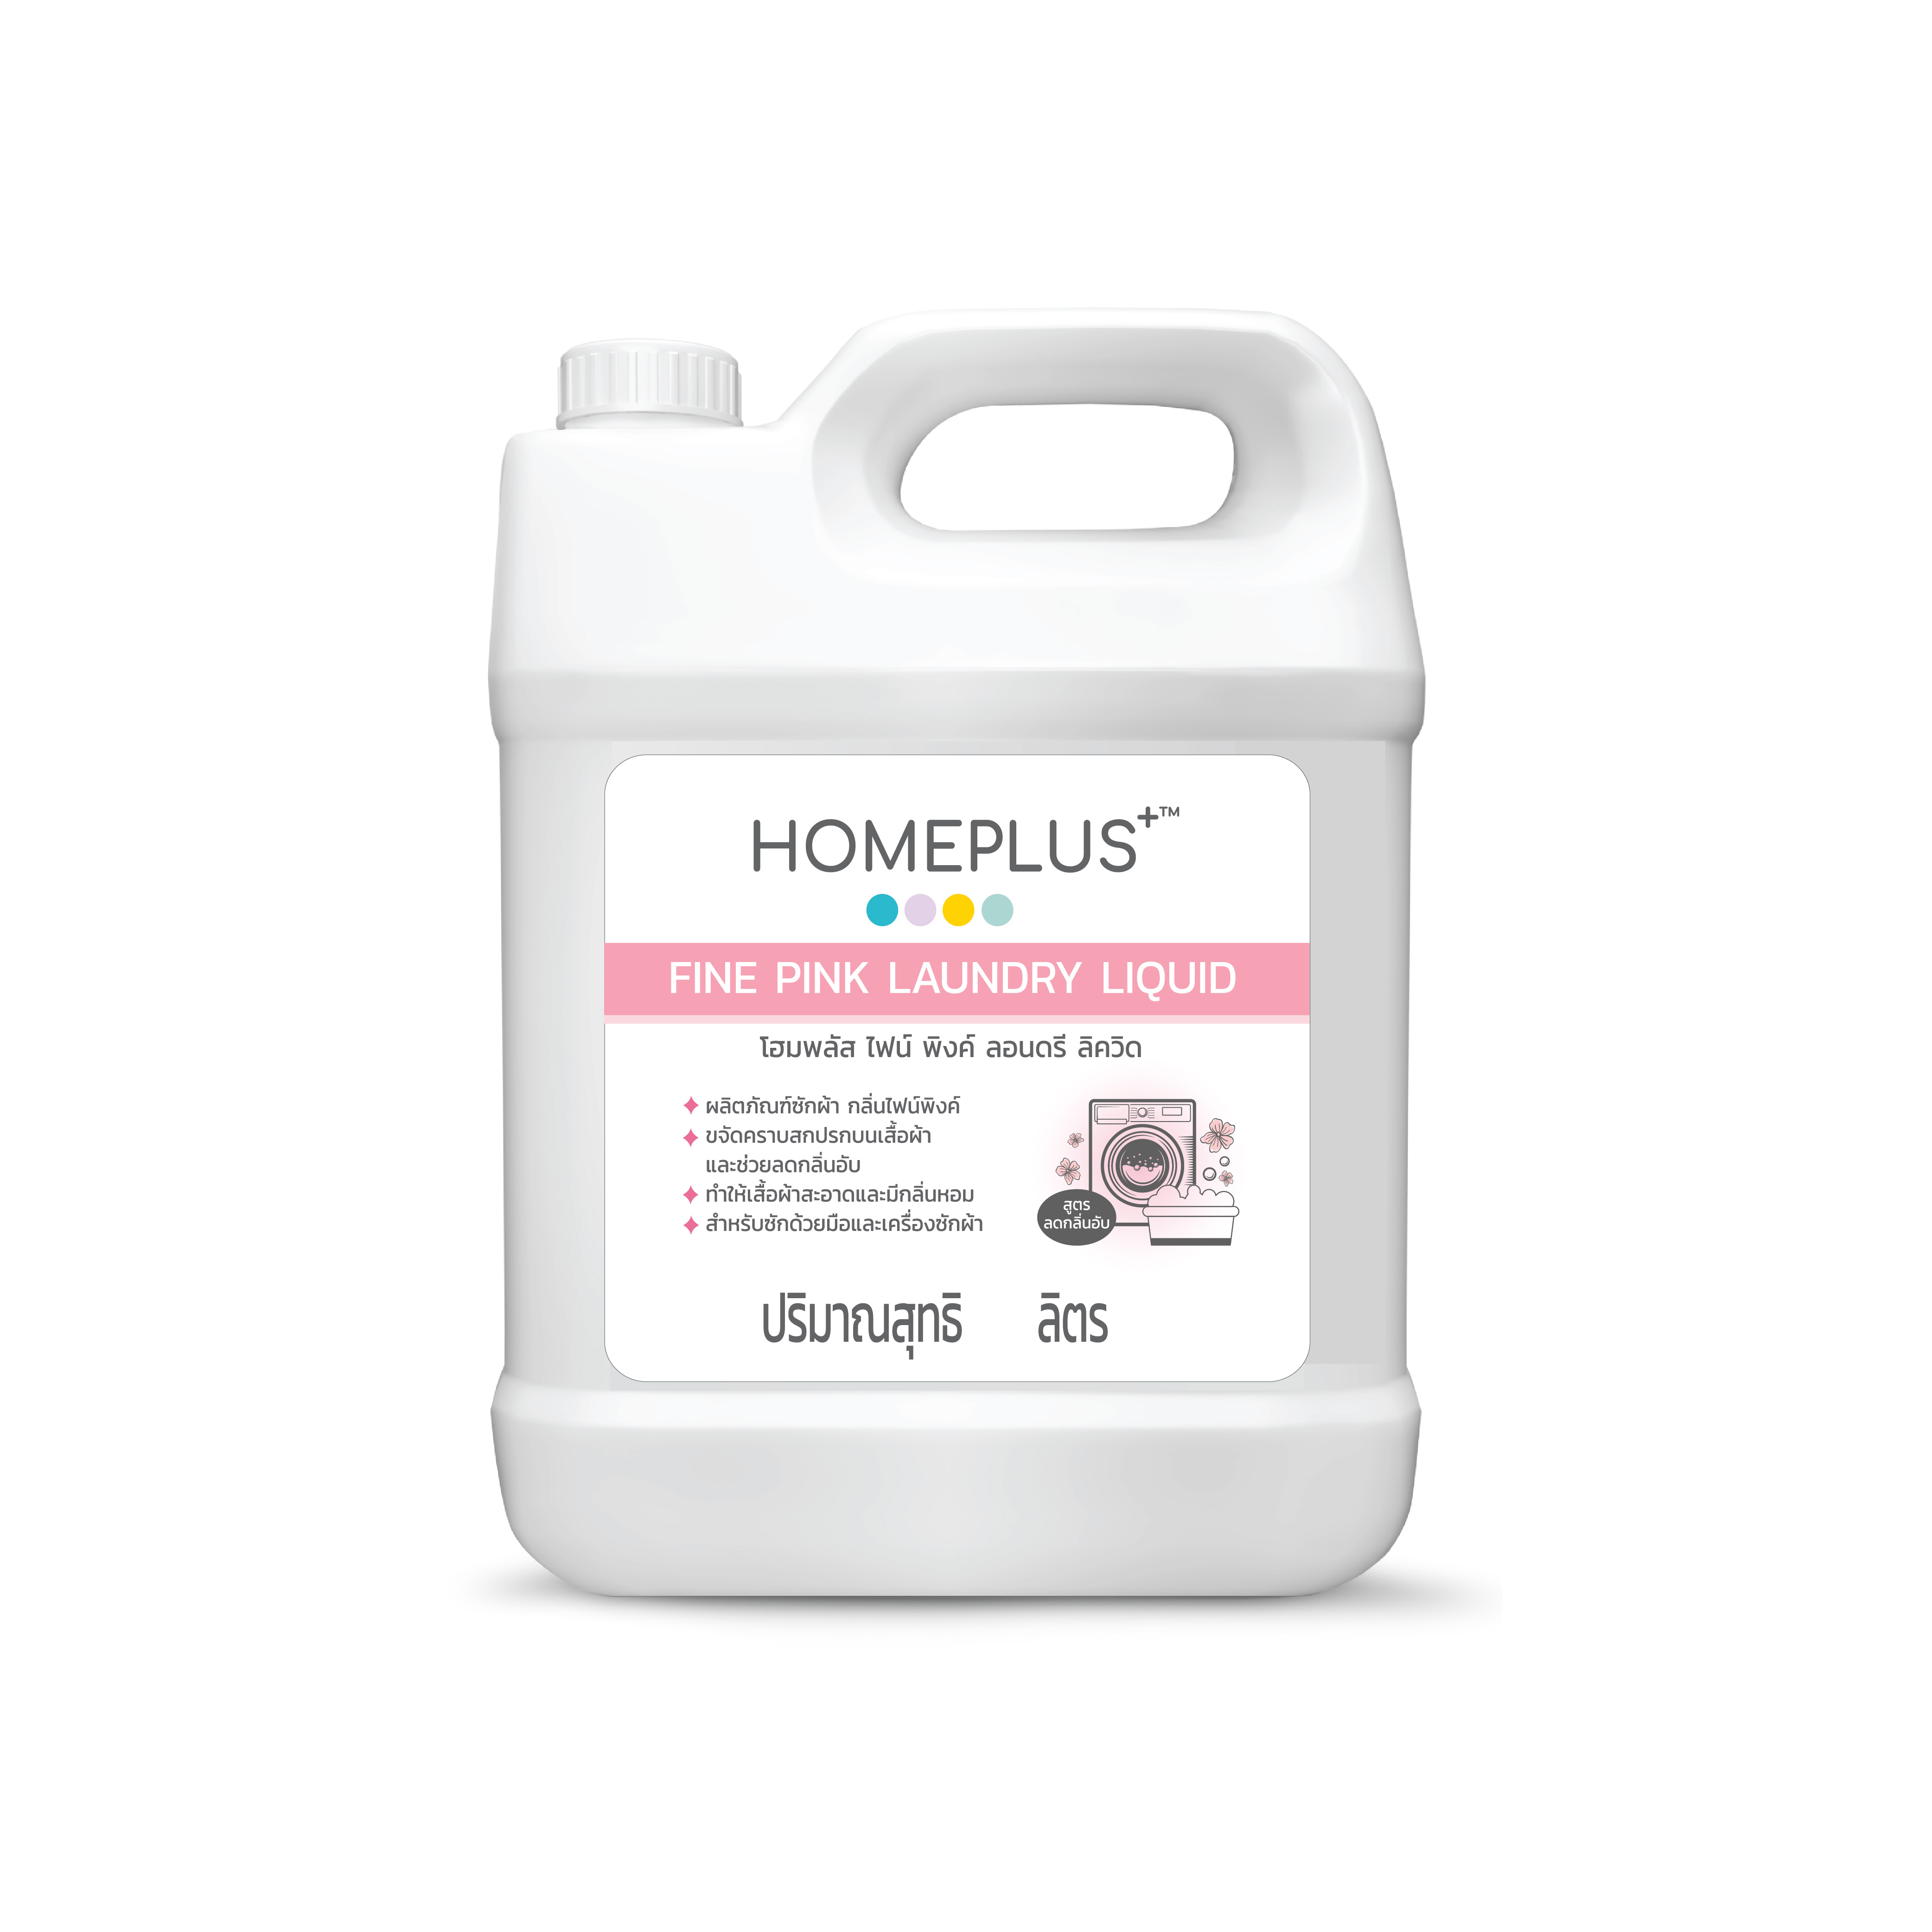 Homeplus Fine Pink Laundry Liquid